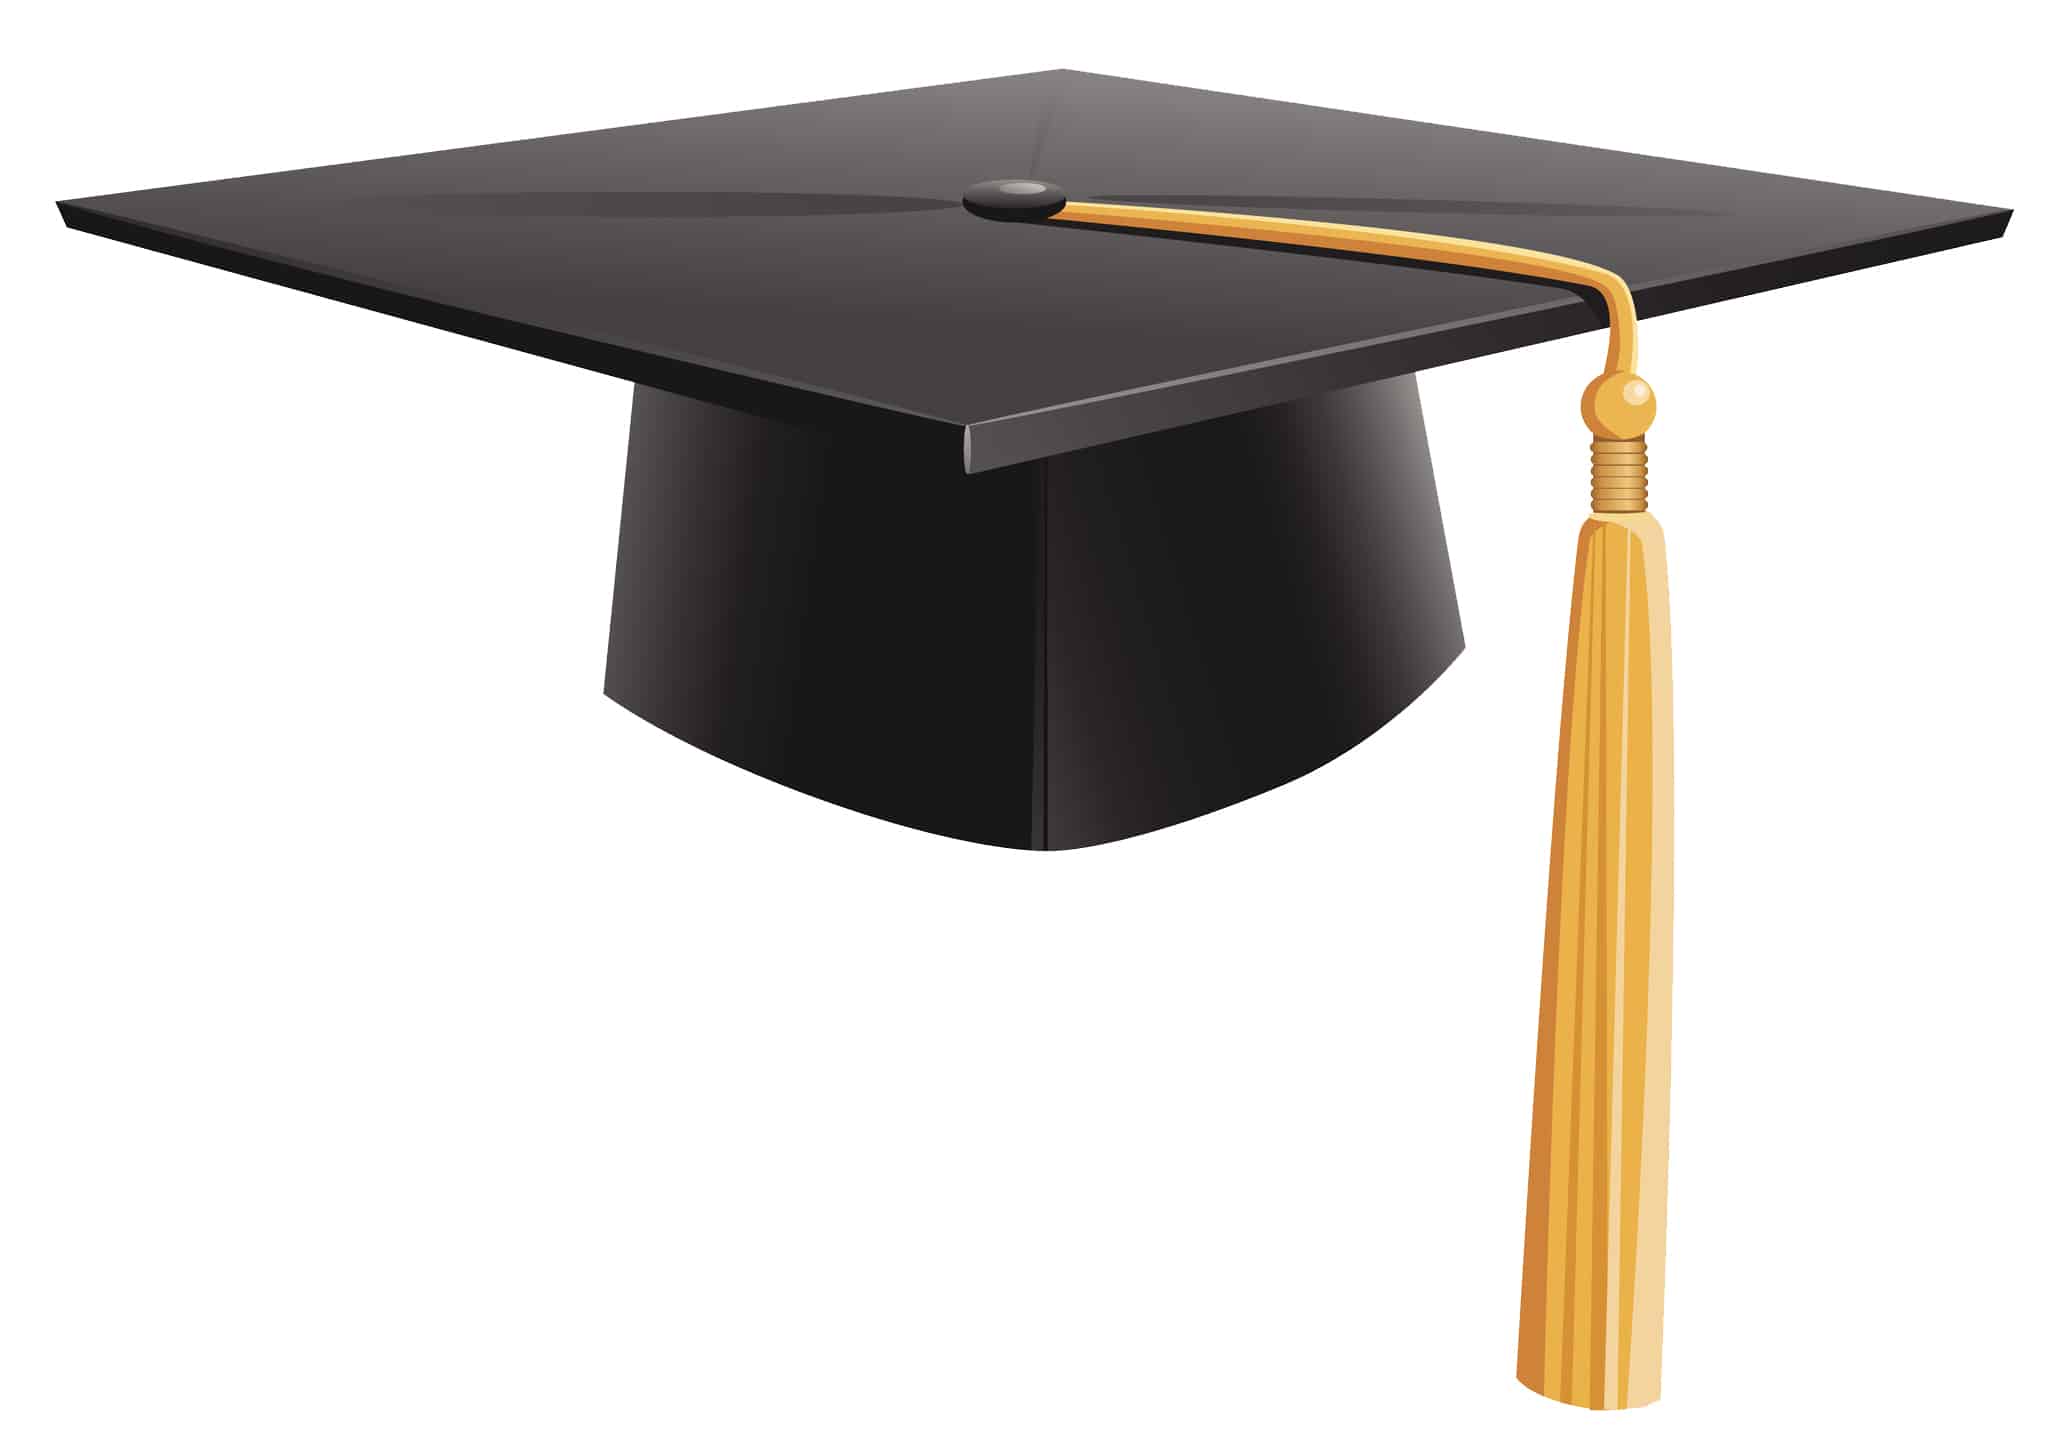 black graduation cap (mortarboard) with gold tassel